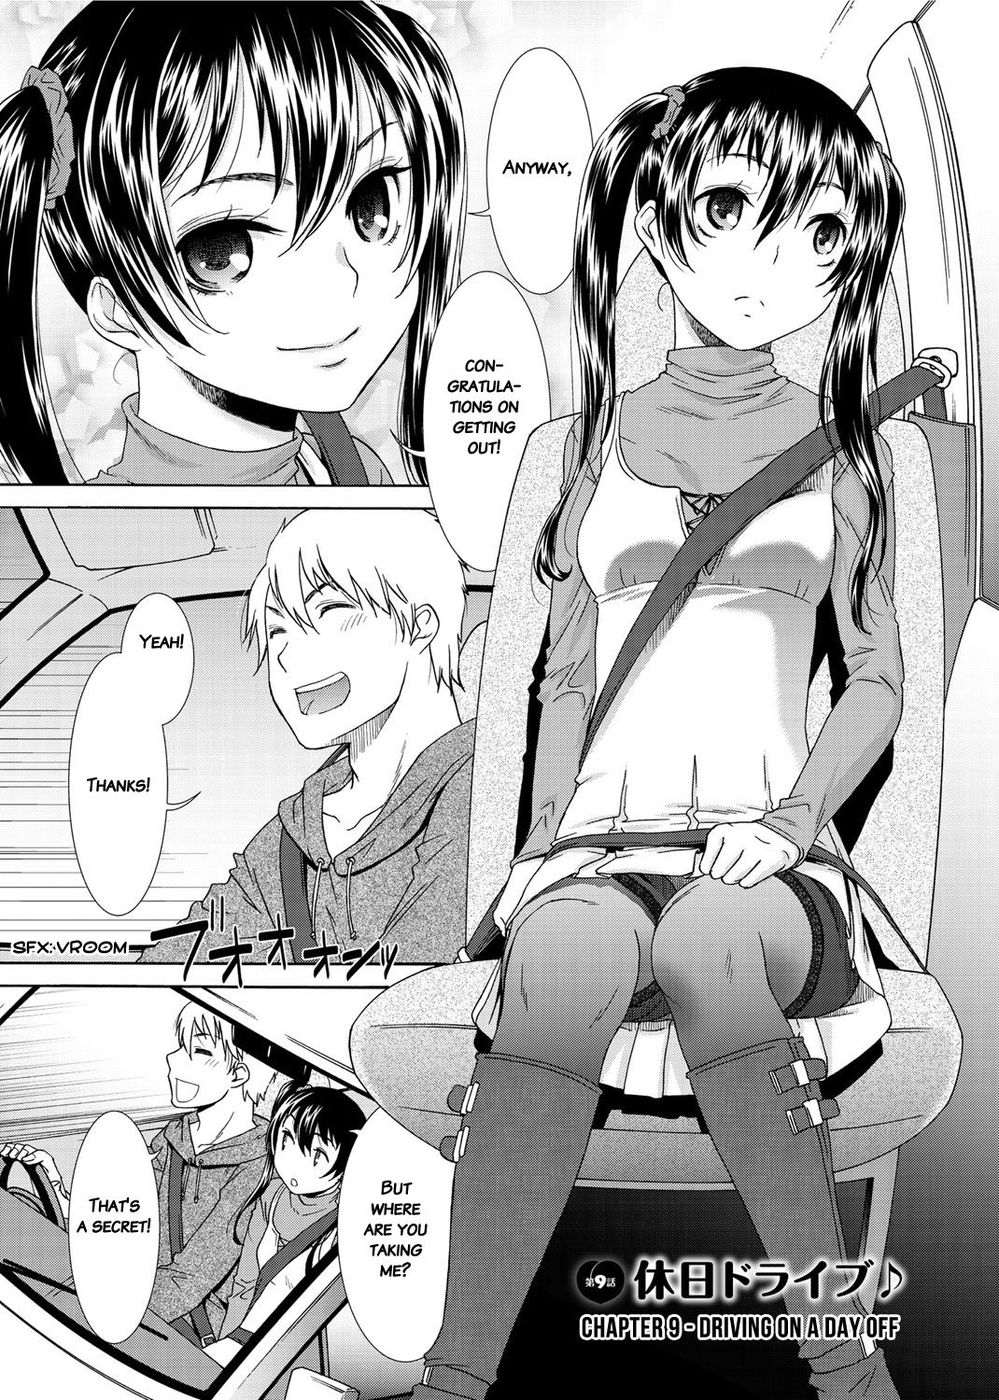 Hentai Manga Comic-Momoiro Nurse-Chapter 9 - Driving on a day off-1